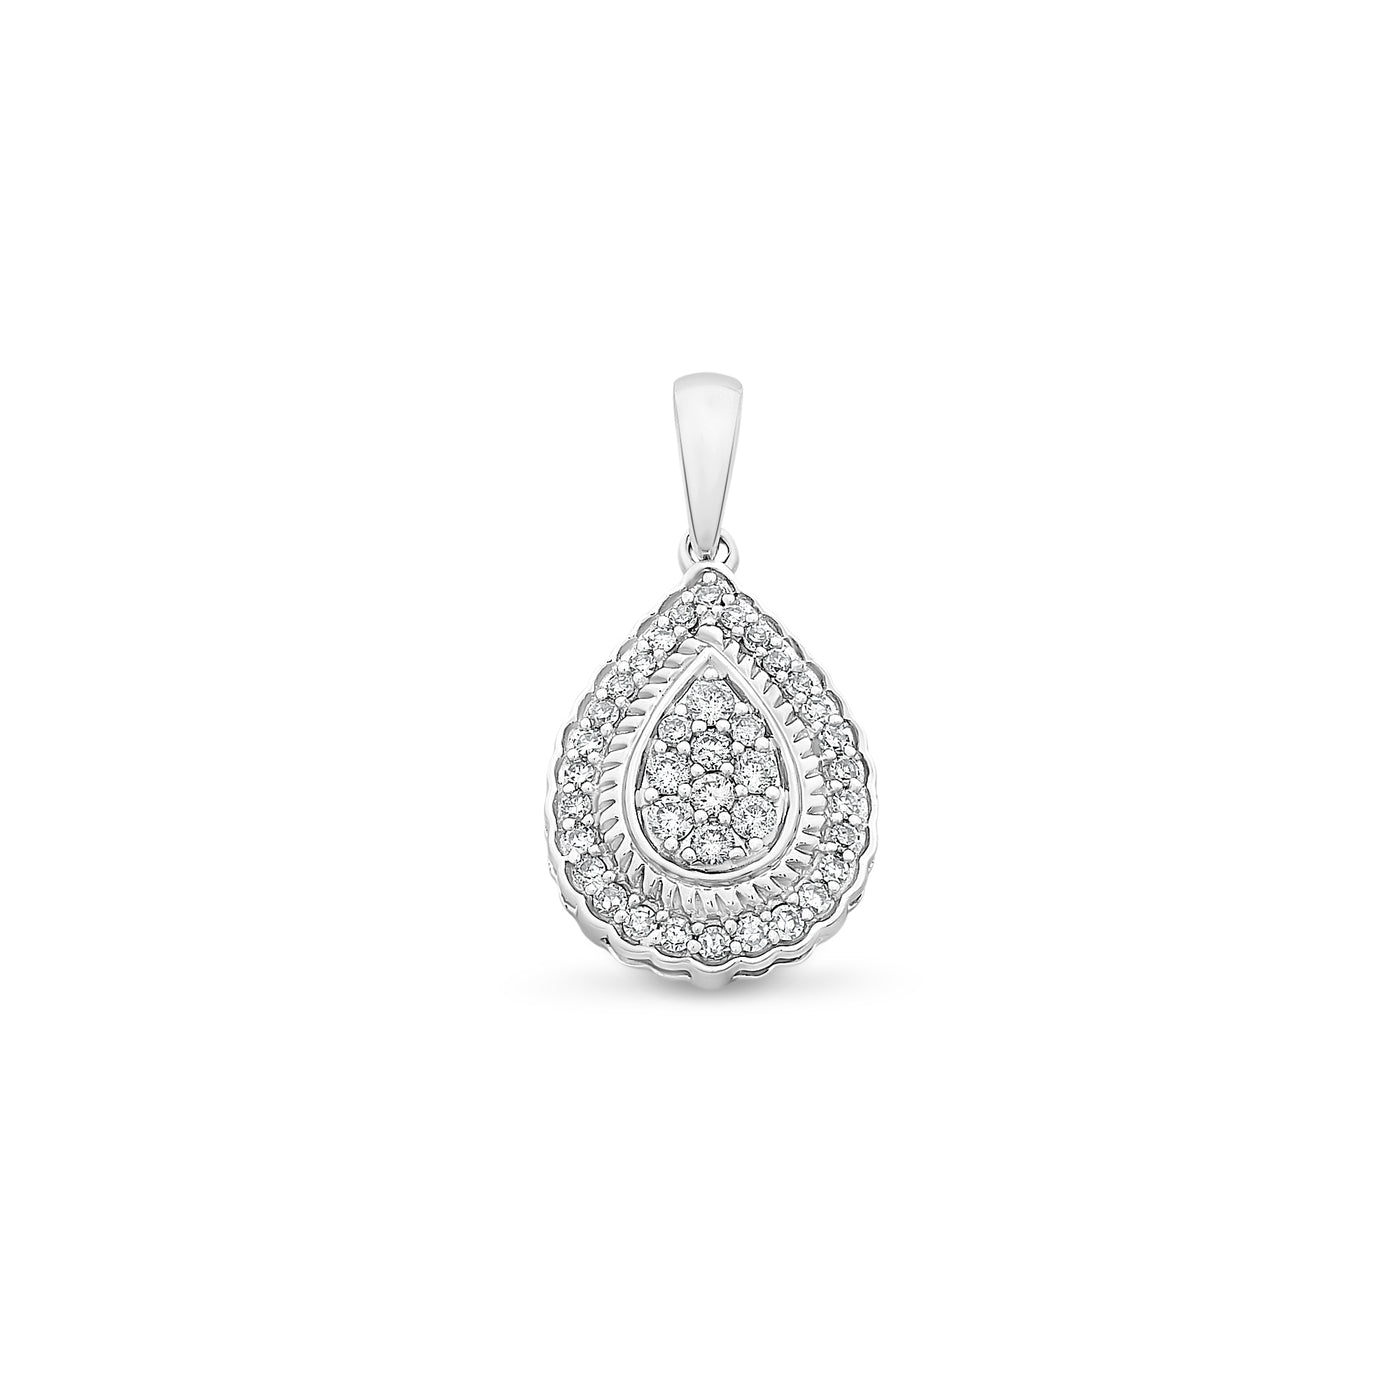 Diamond pendant in 9k white gold